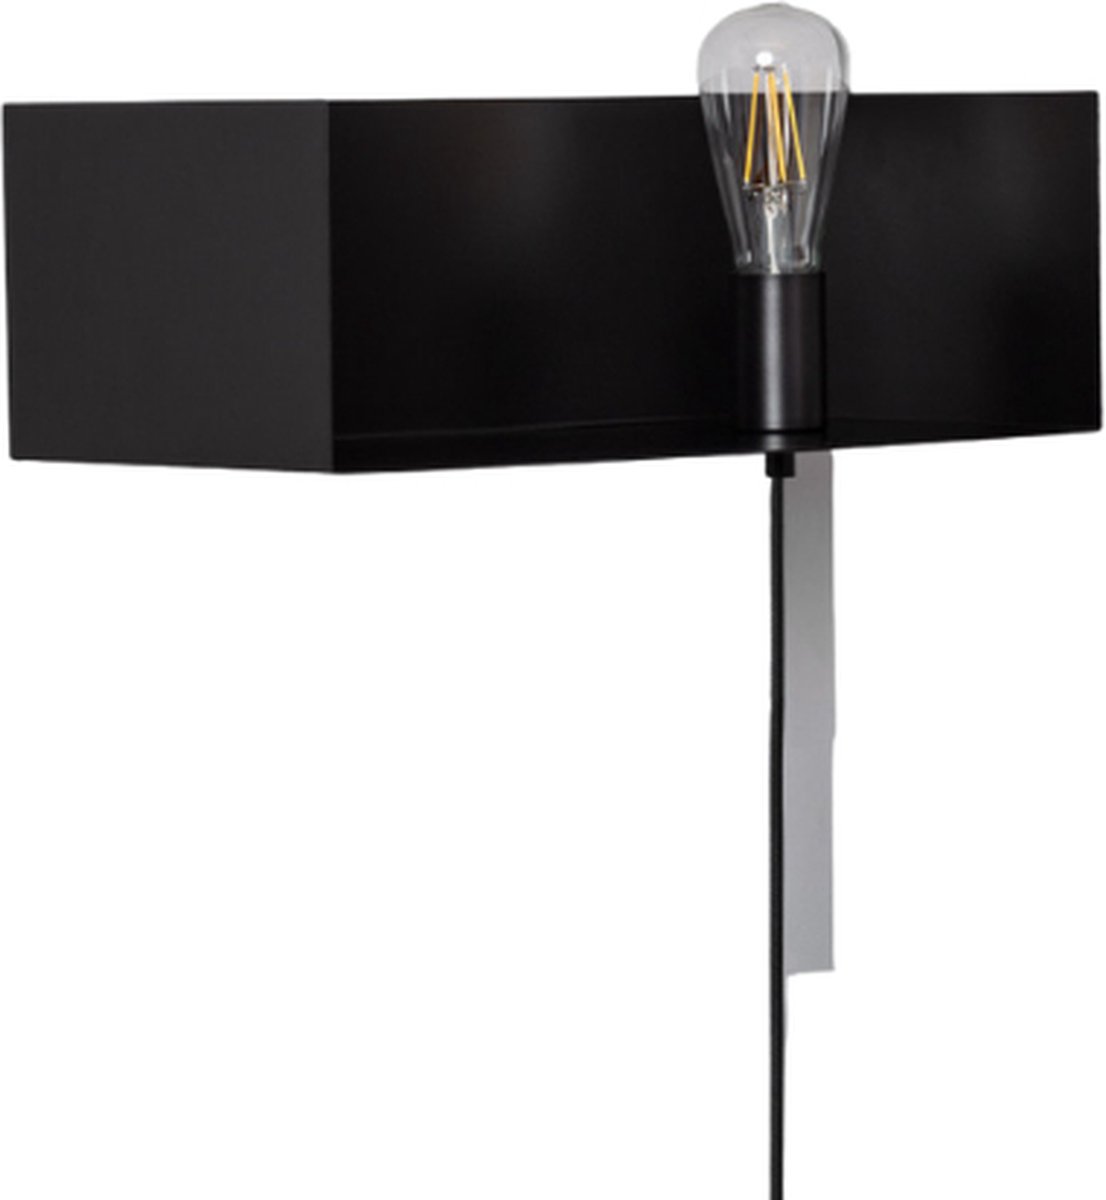 Bussandri - Moderne Wandlamp - Metaal - Modern - E27 - L:20cm - Voor Binnen - Woonkamer - Eetkamer - Slaapkamer - Wandlampen - Zwart